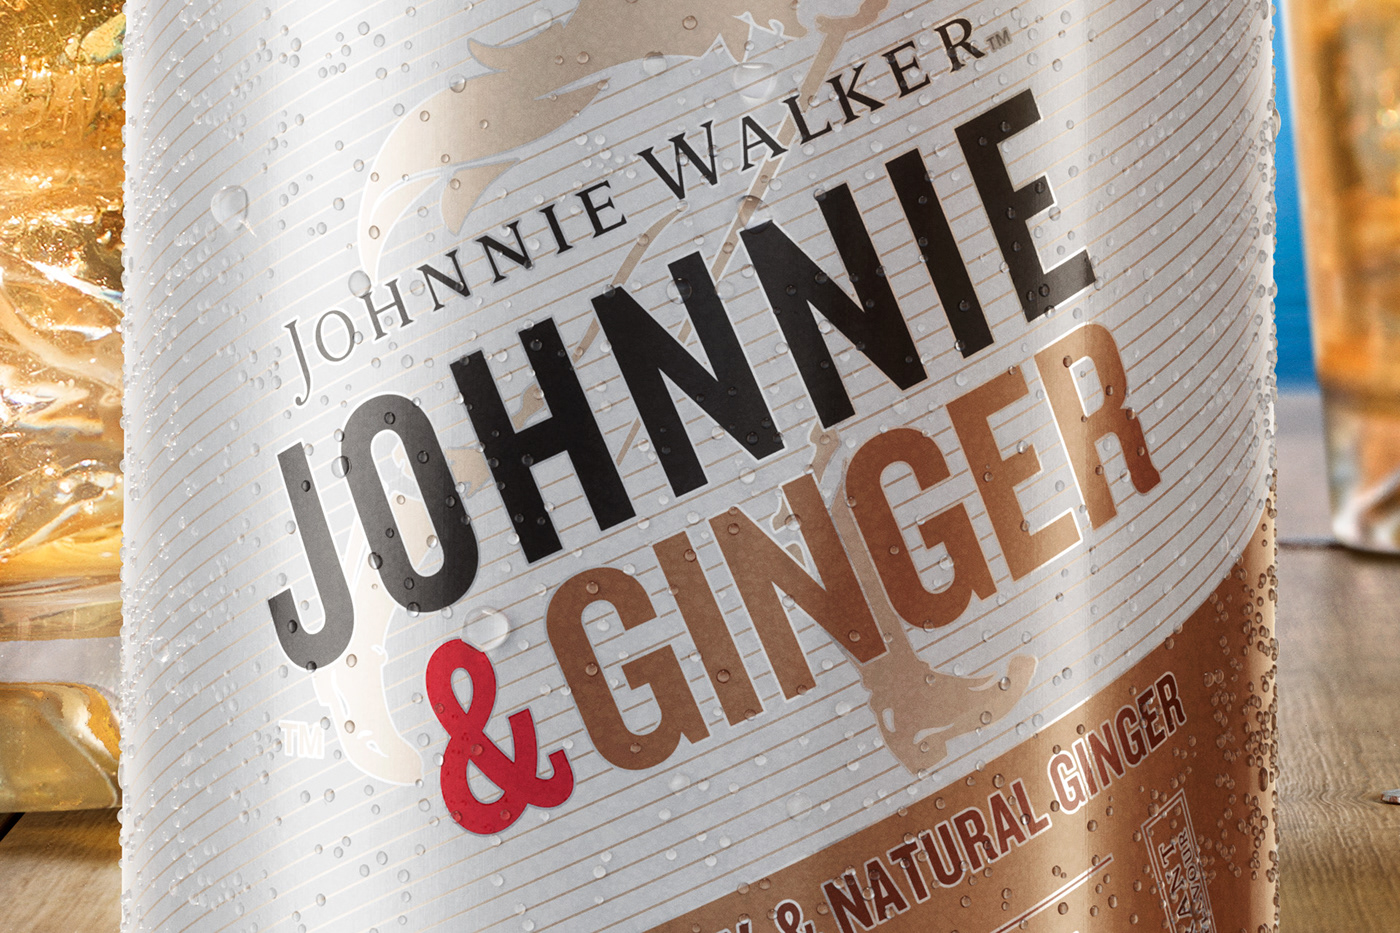 Johnnie Walker ginger Spritz drink can 3D visual state